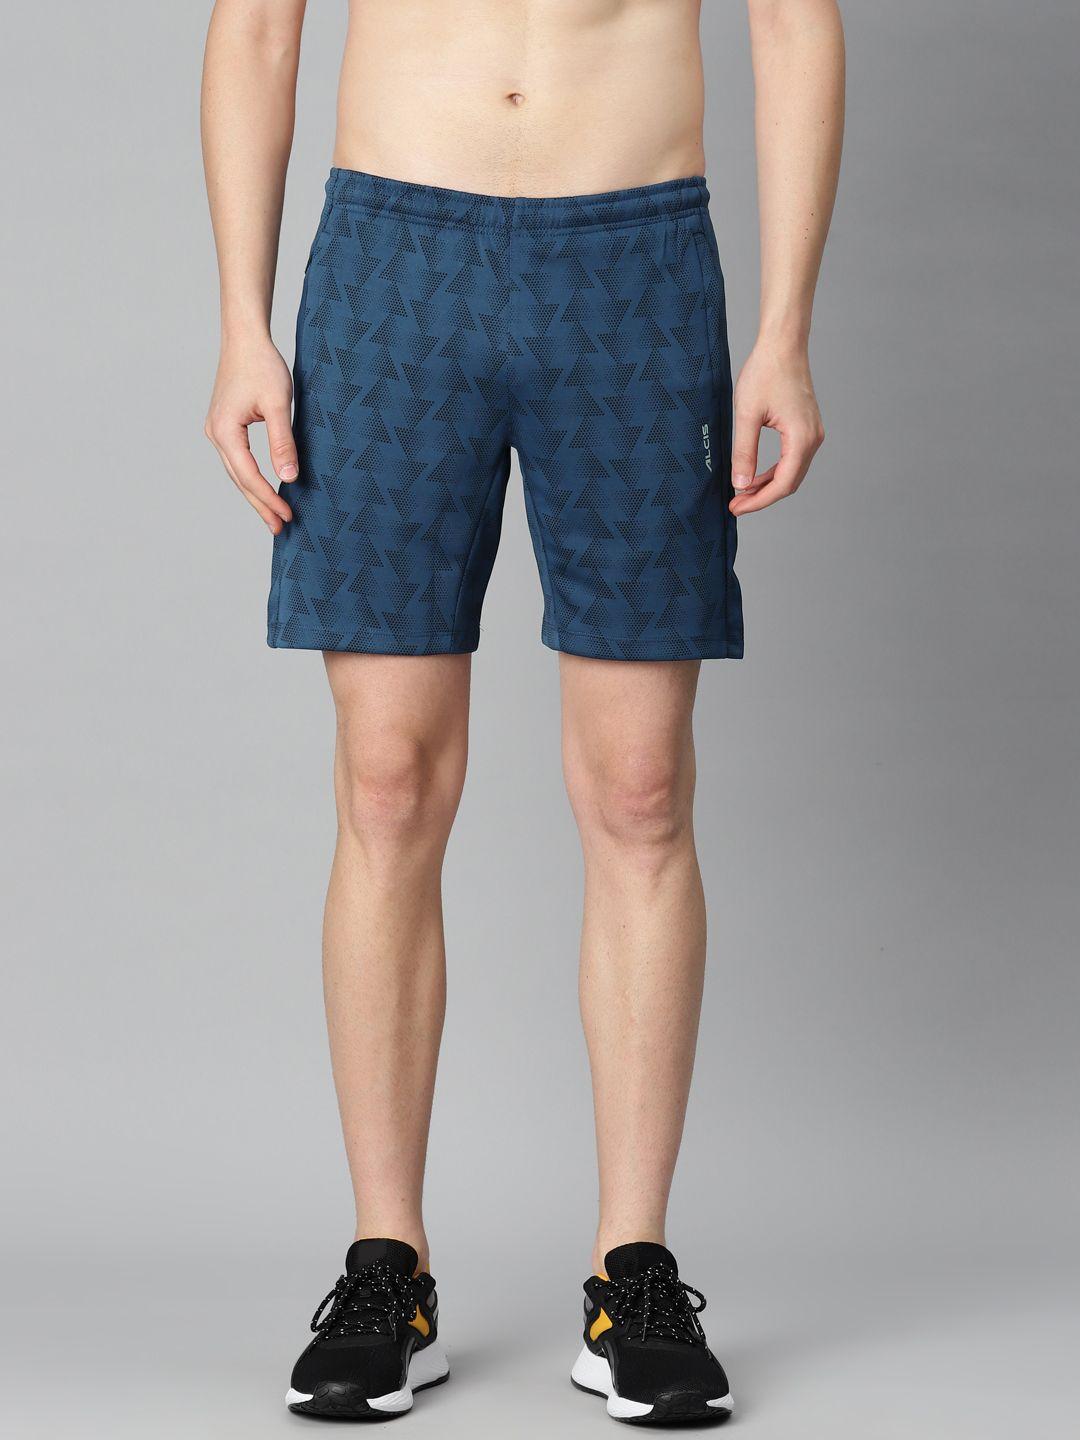 alcis-men-printed-slim-fit-training-sports-shorts